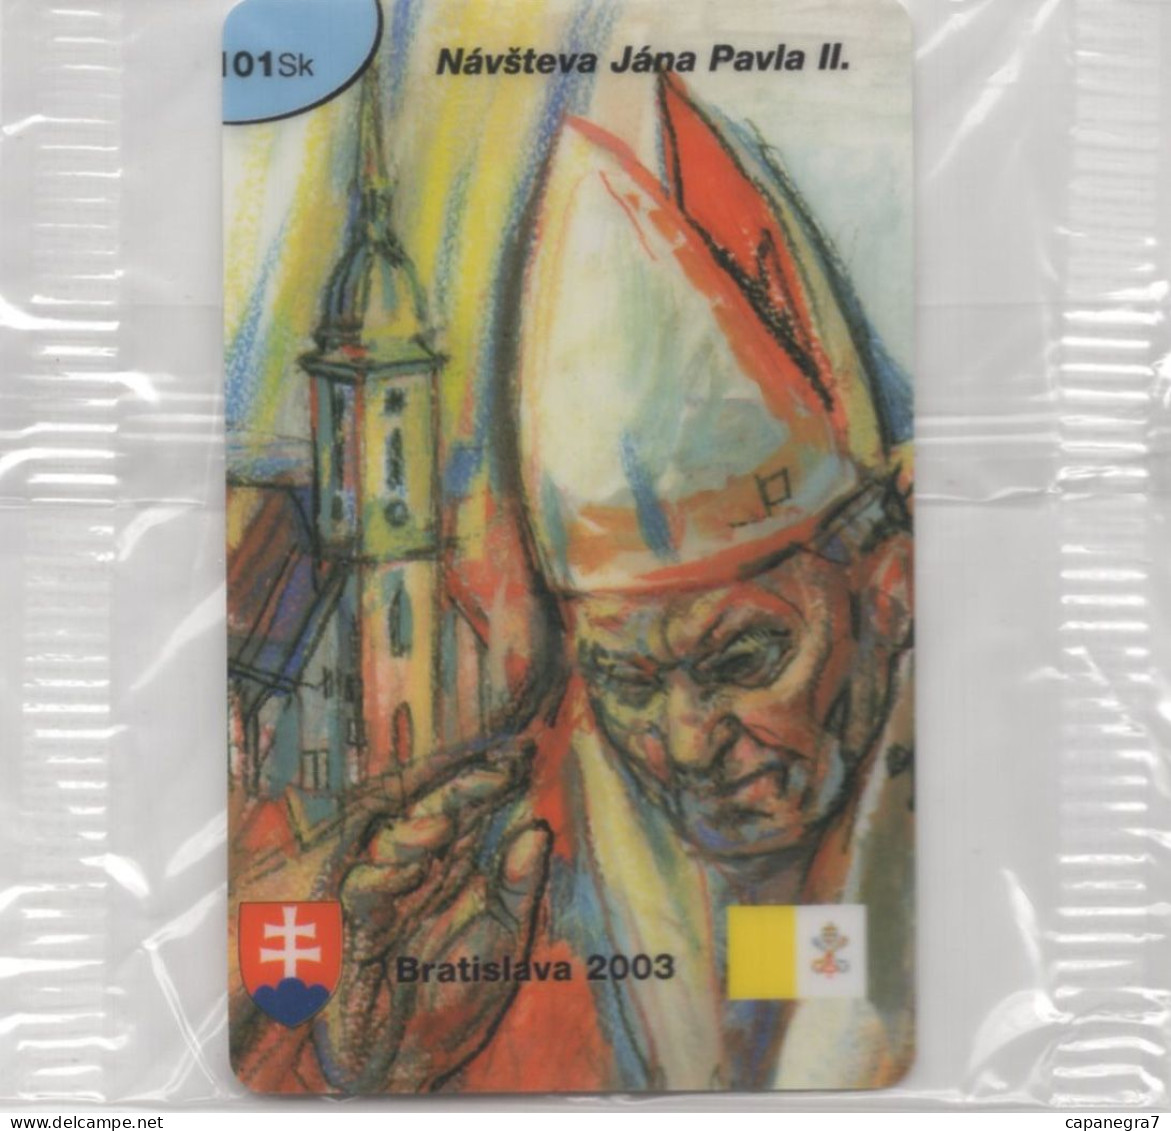 Ope John Paulu II. - Bratislava 2003, Remote Memory, Prepaid Calling Card, 101 Sk., 1.250 Pc., GlobalIPhone, Slovakia, M - Slowakei